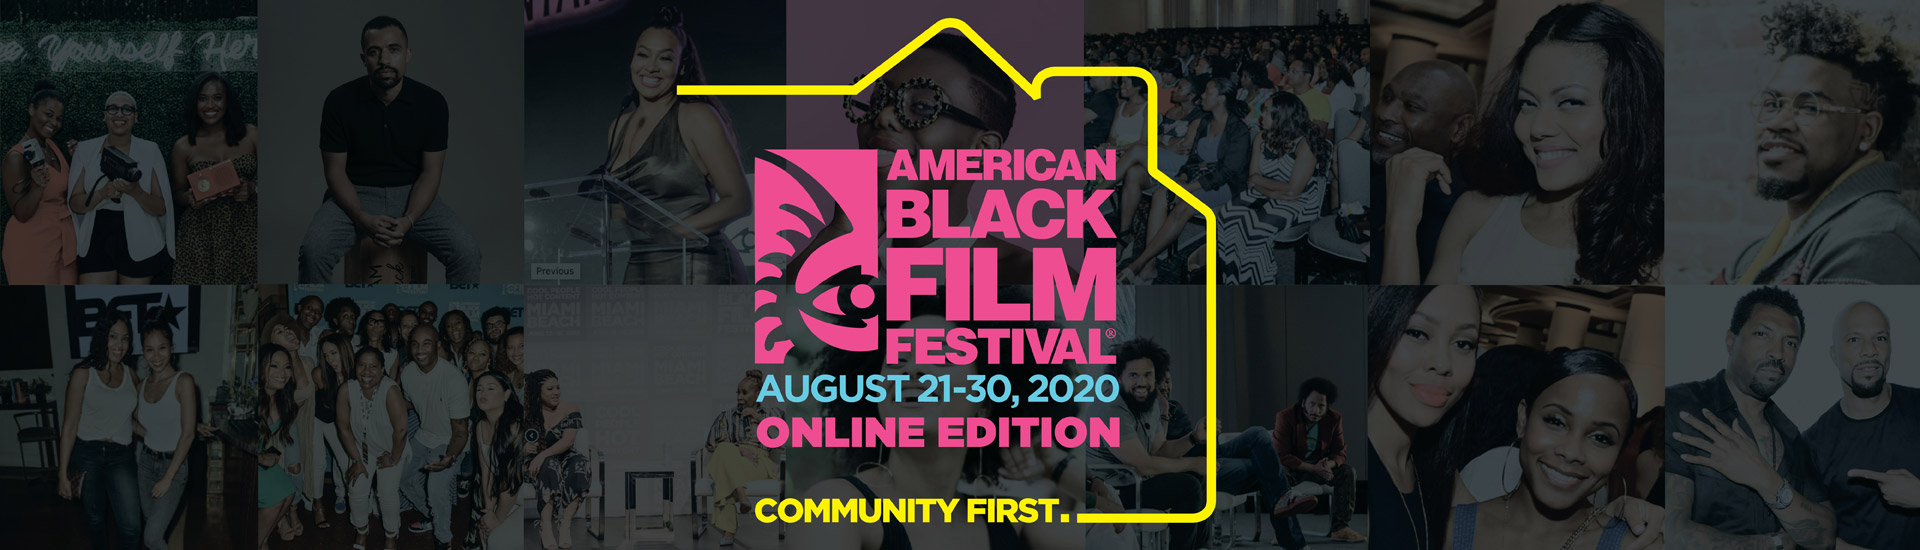 American Black Film Festival The world’s largest community of Black